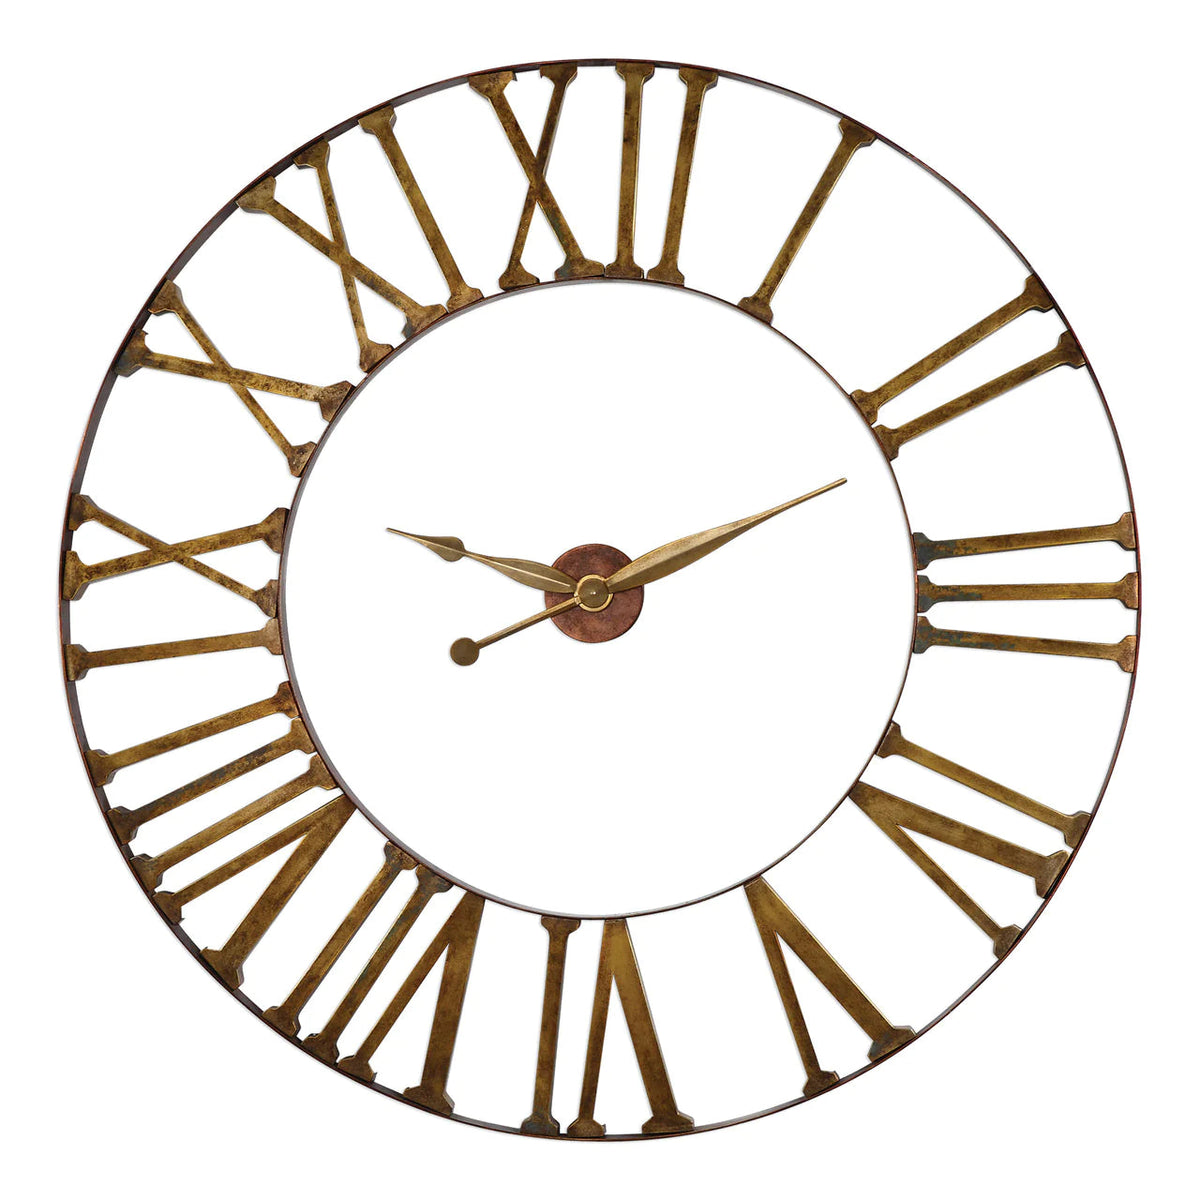 Kaison Clock - Antique Bronze Finish